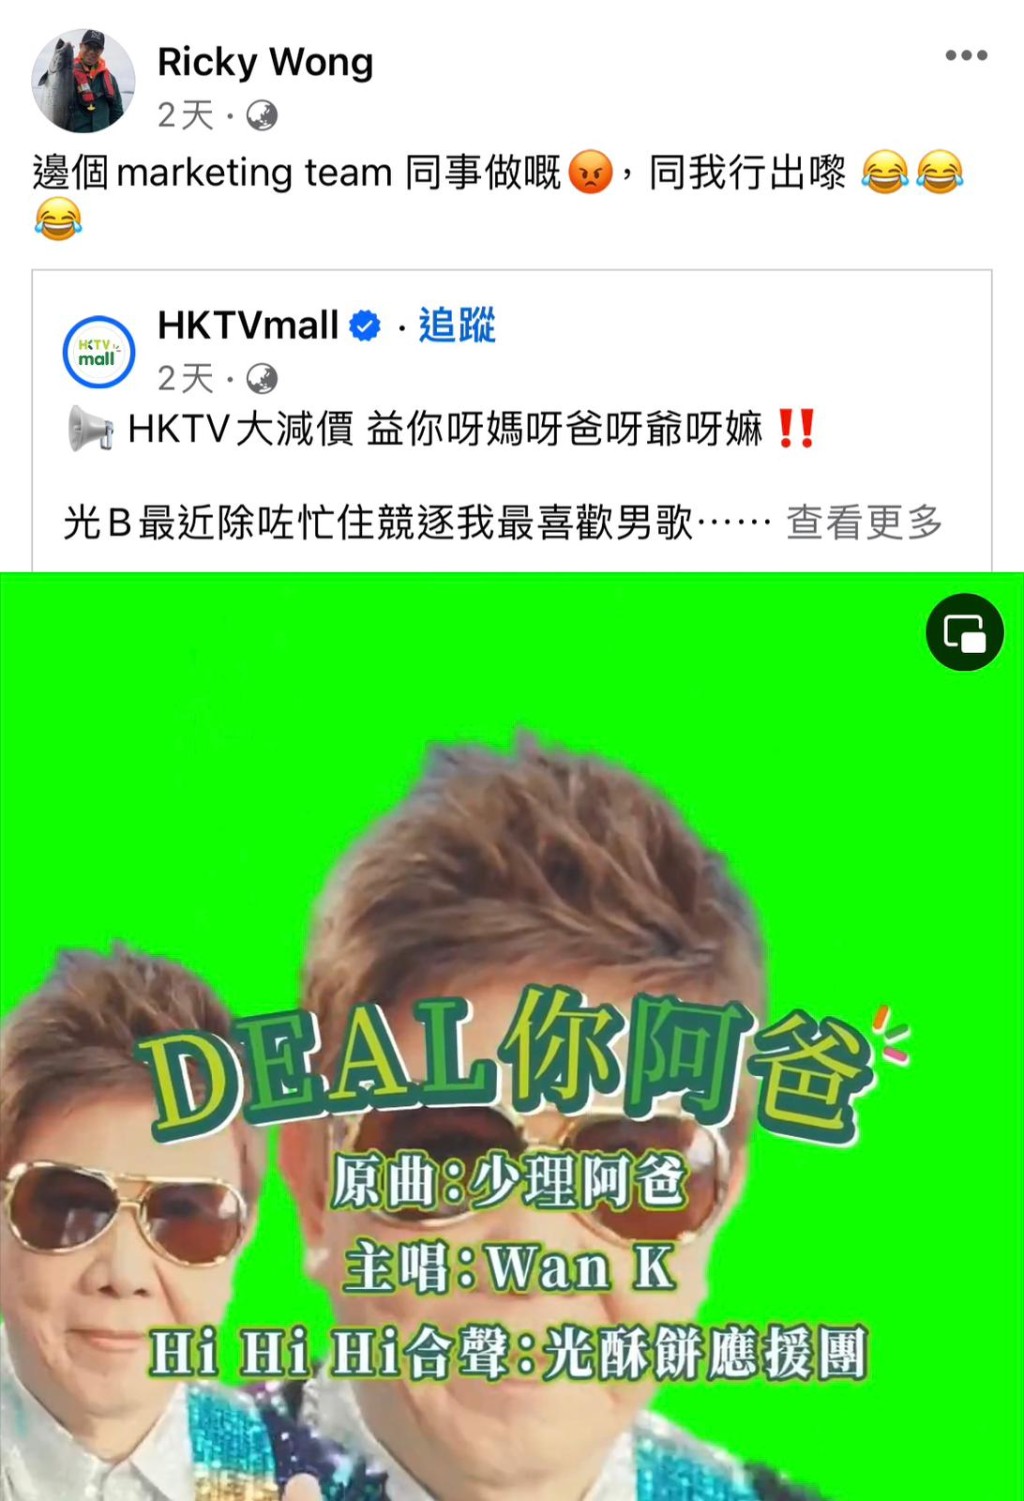 HKTV mall老闆王維基也親自在facebook轉發MV，並指「邊個marketing team同事做嘅，同我行出嚟 」。